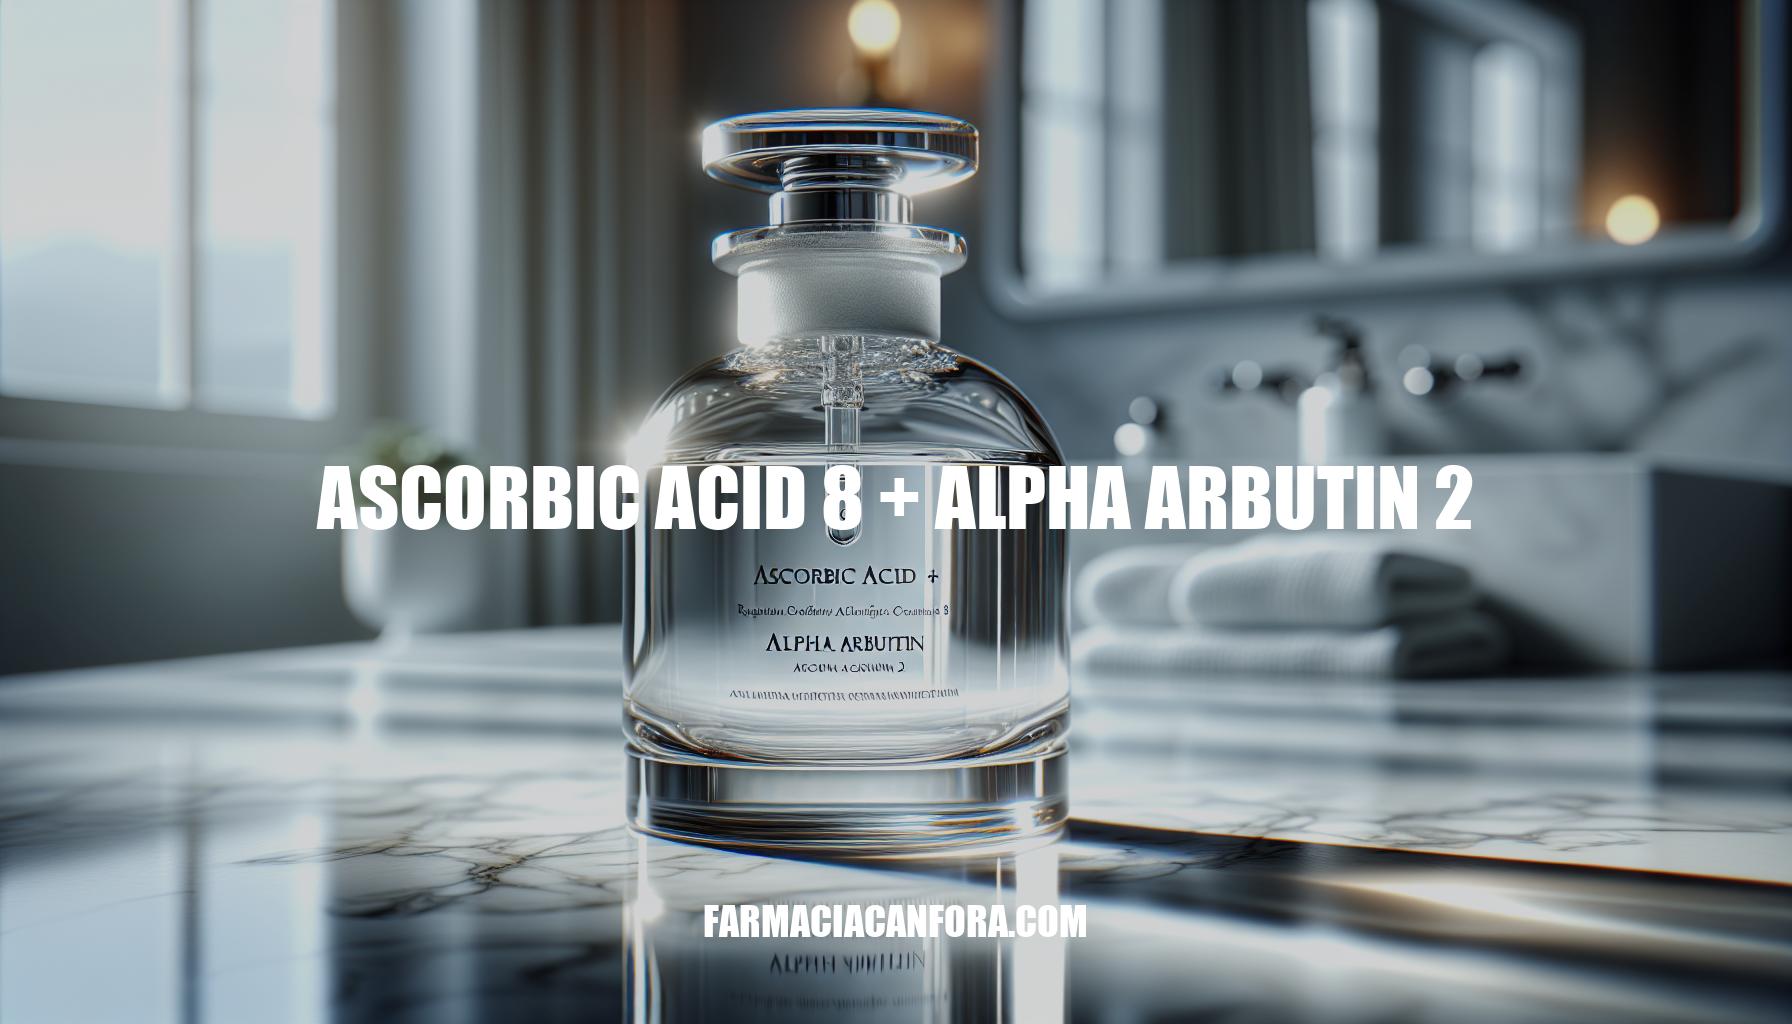 The Power of Ascorbic Acid 8 + Alpha Arbutin 2 in Skincare